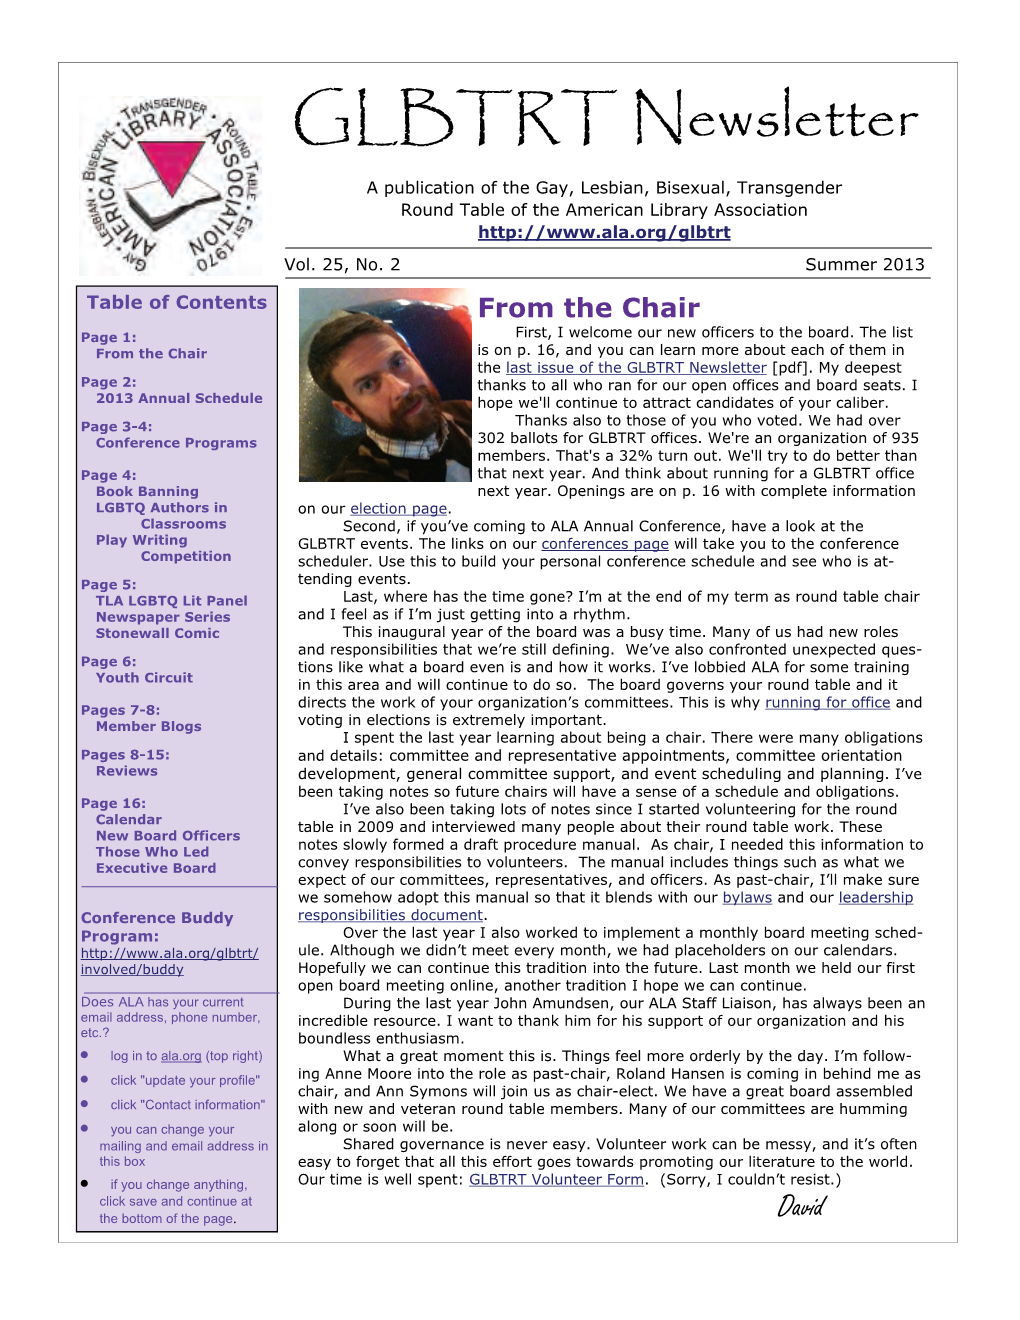 GLBTRT Newsletter, Vol. 25, No. 2, Summer 2013